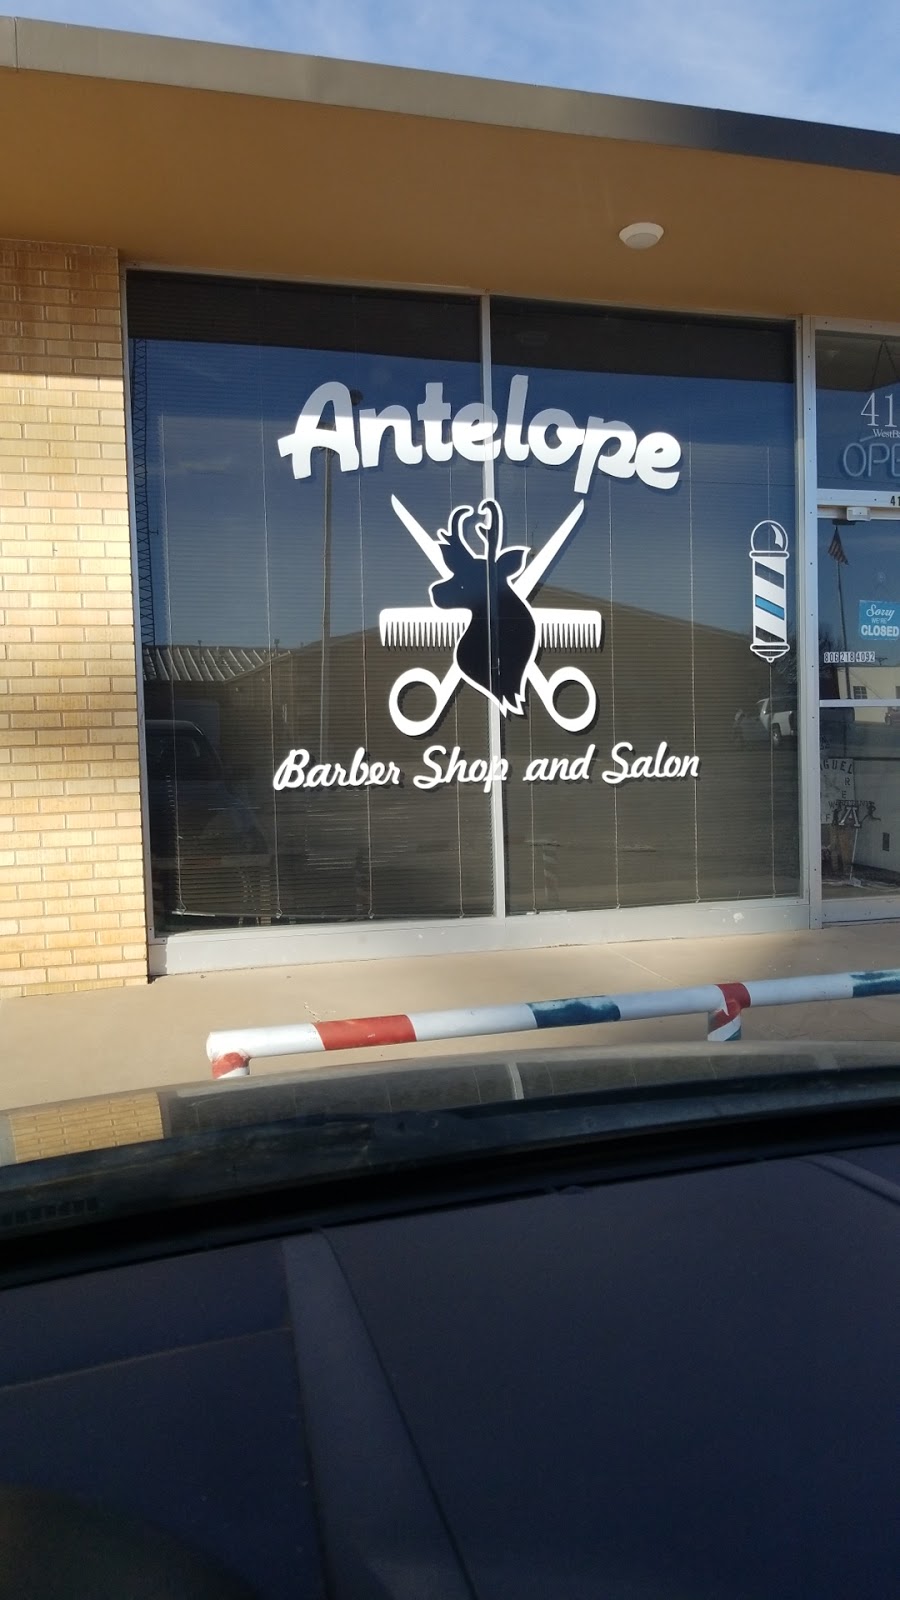 Antelope Barber Shop and Salon | 420 9th St, Abernathy, TX 79311, USA | Phone: (806) 218-4092